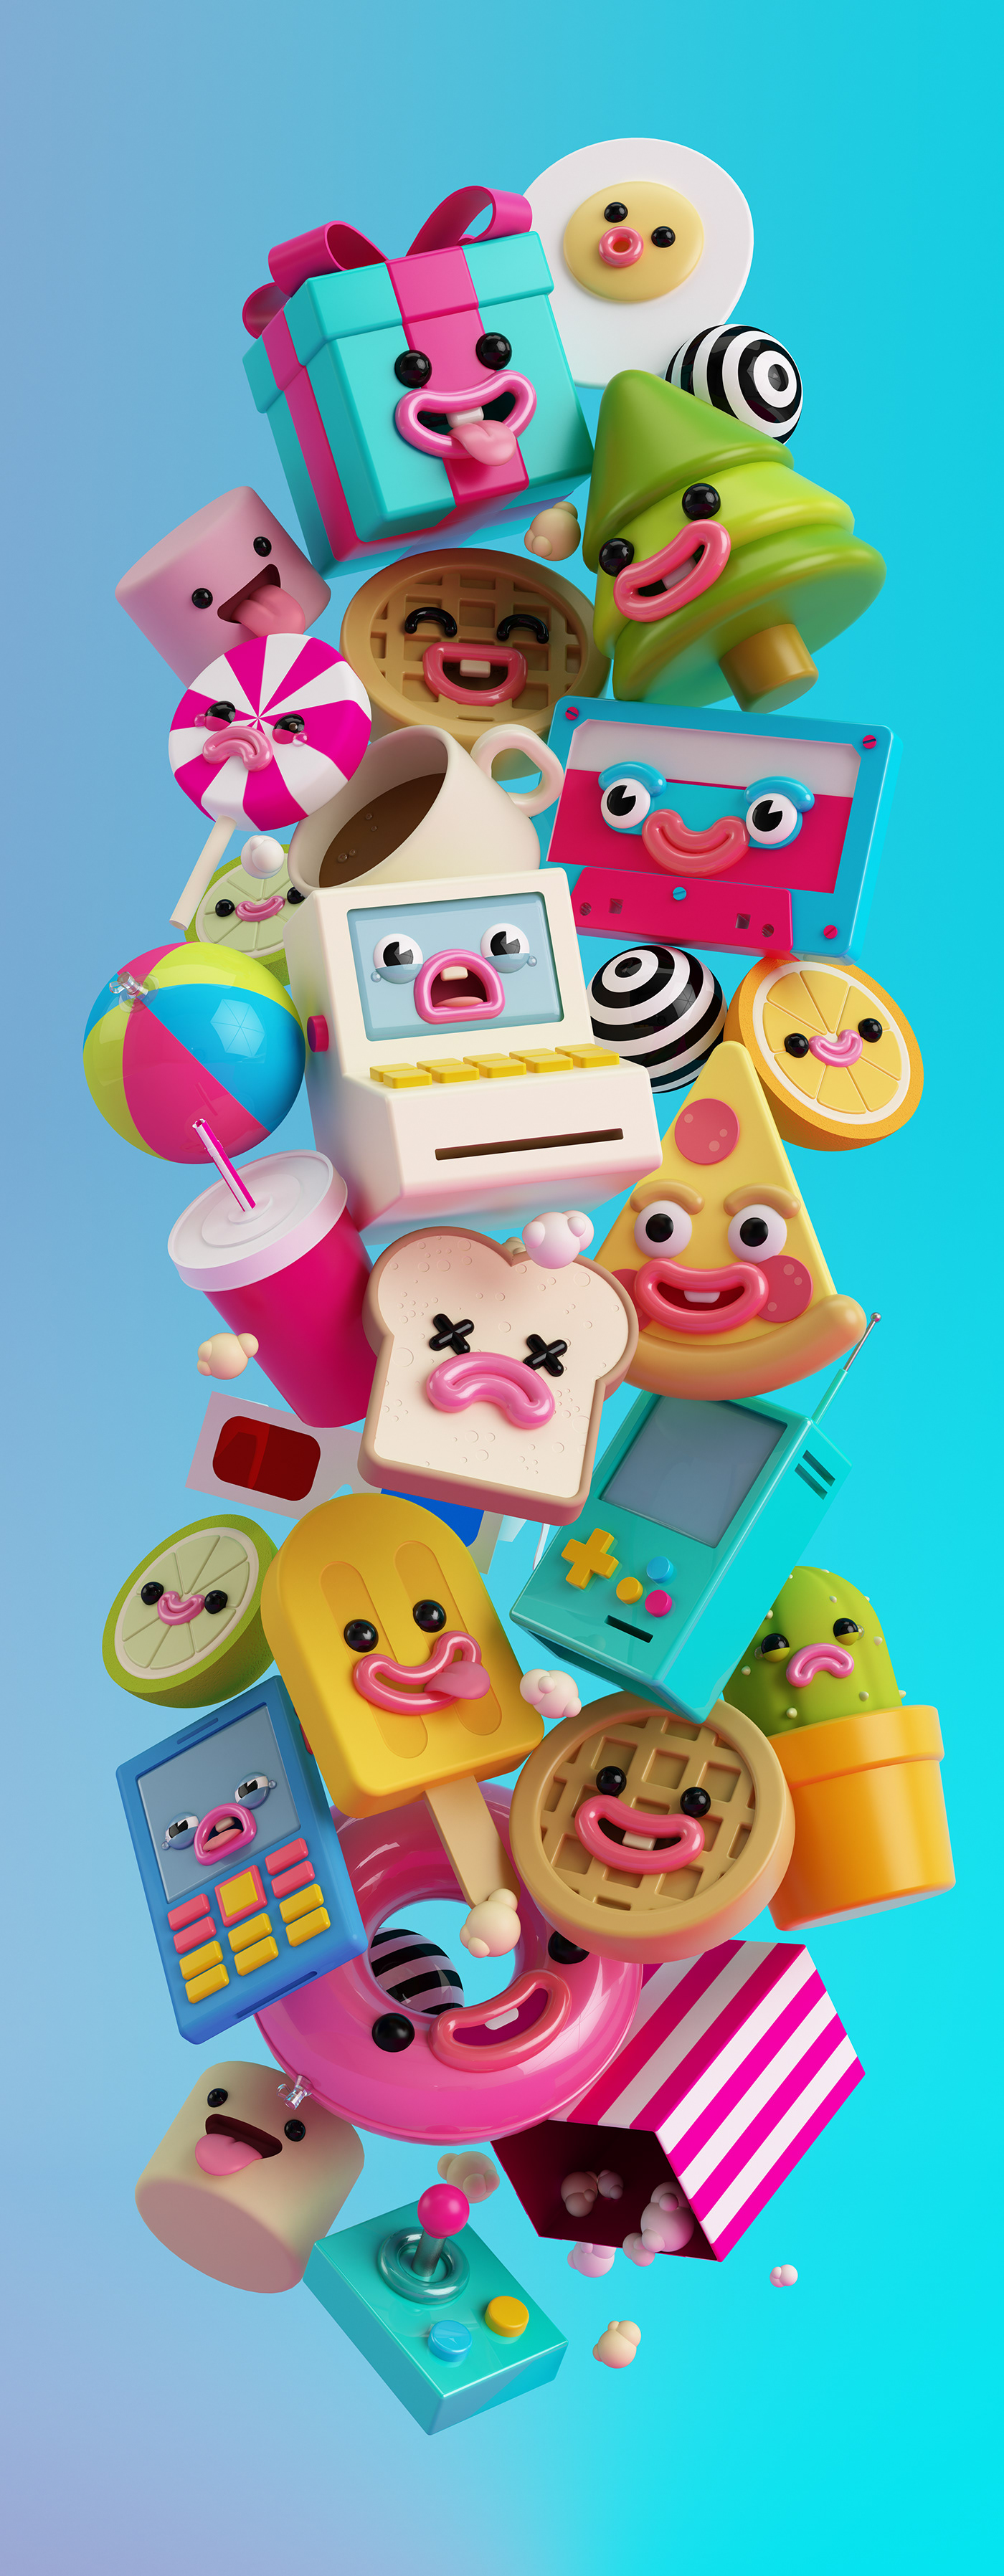 3D characters Cinema kawaii cute friends colorful